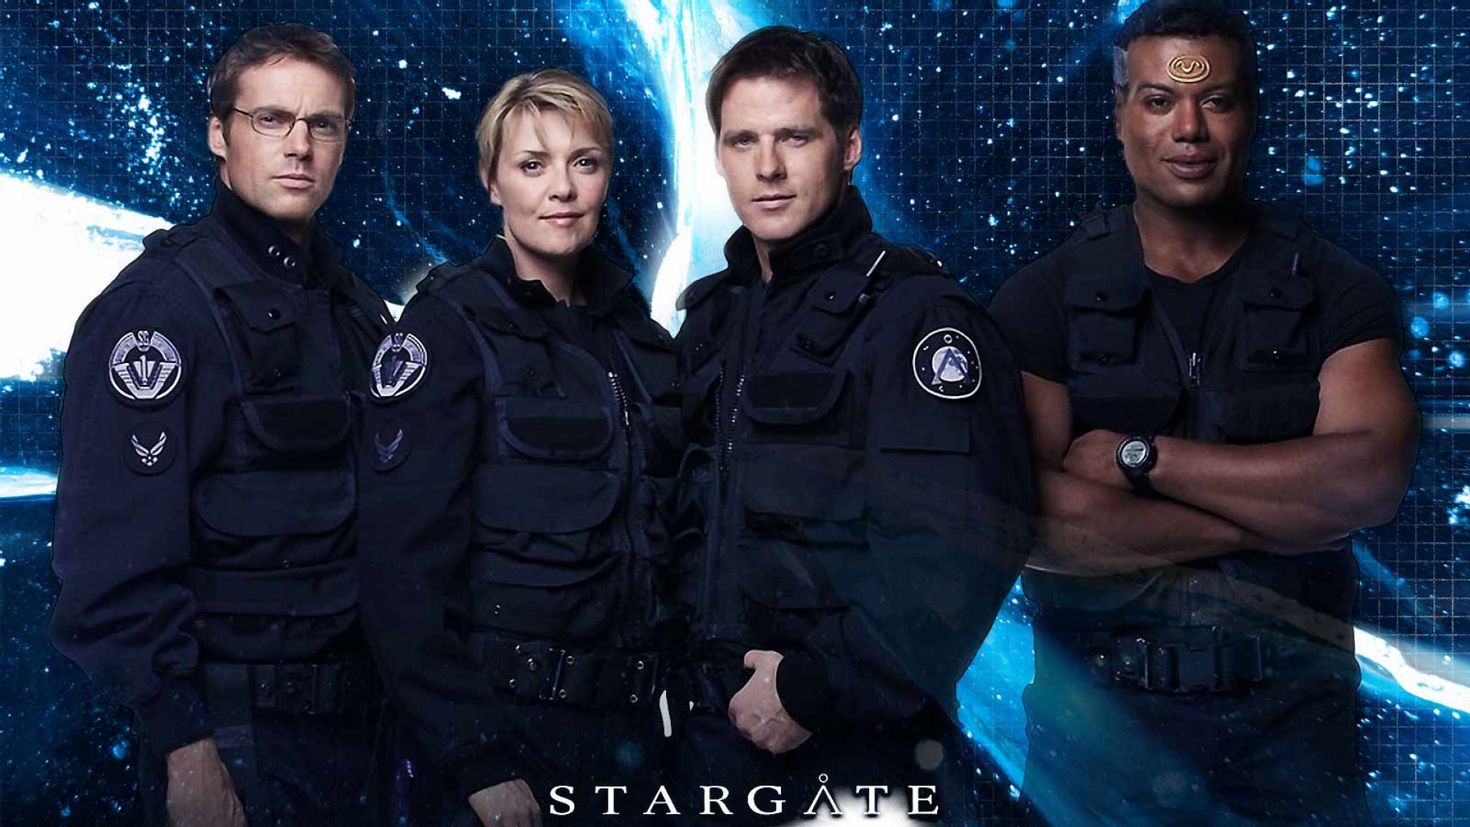 Звездные врата зв 1 5. Звёздные врата 3в-1. Stargate sg1.